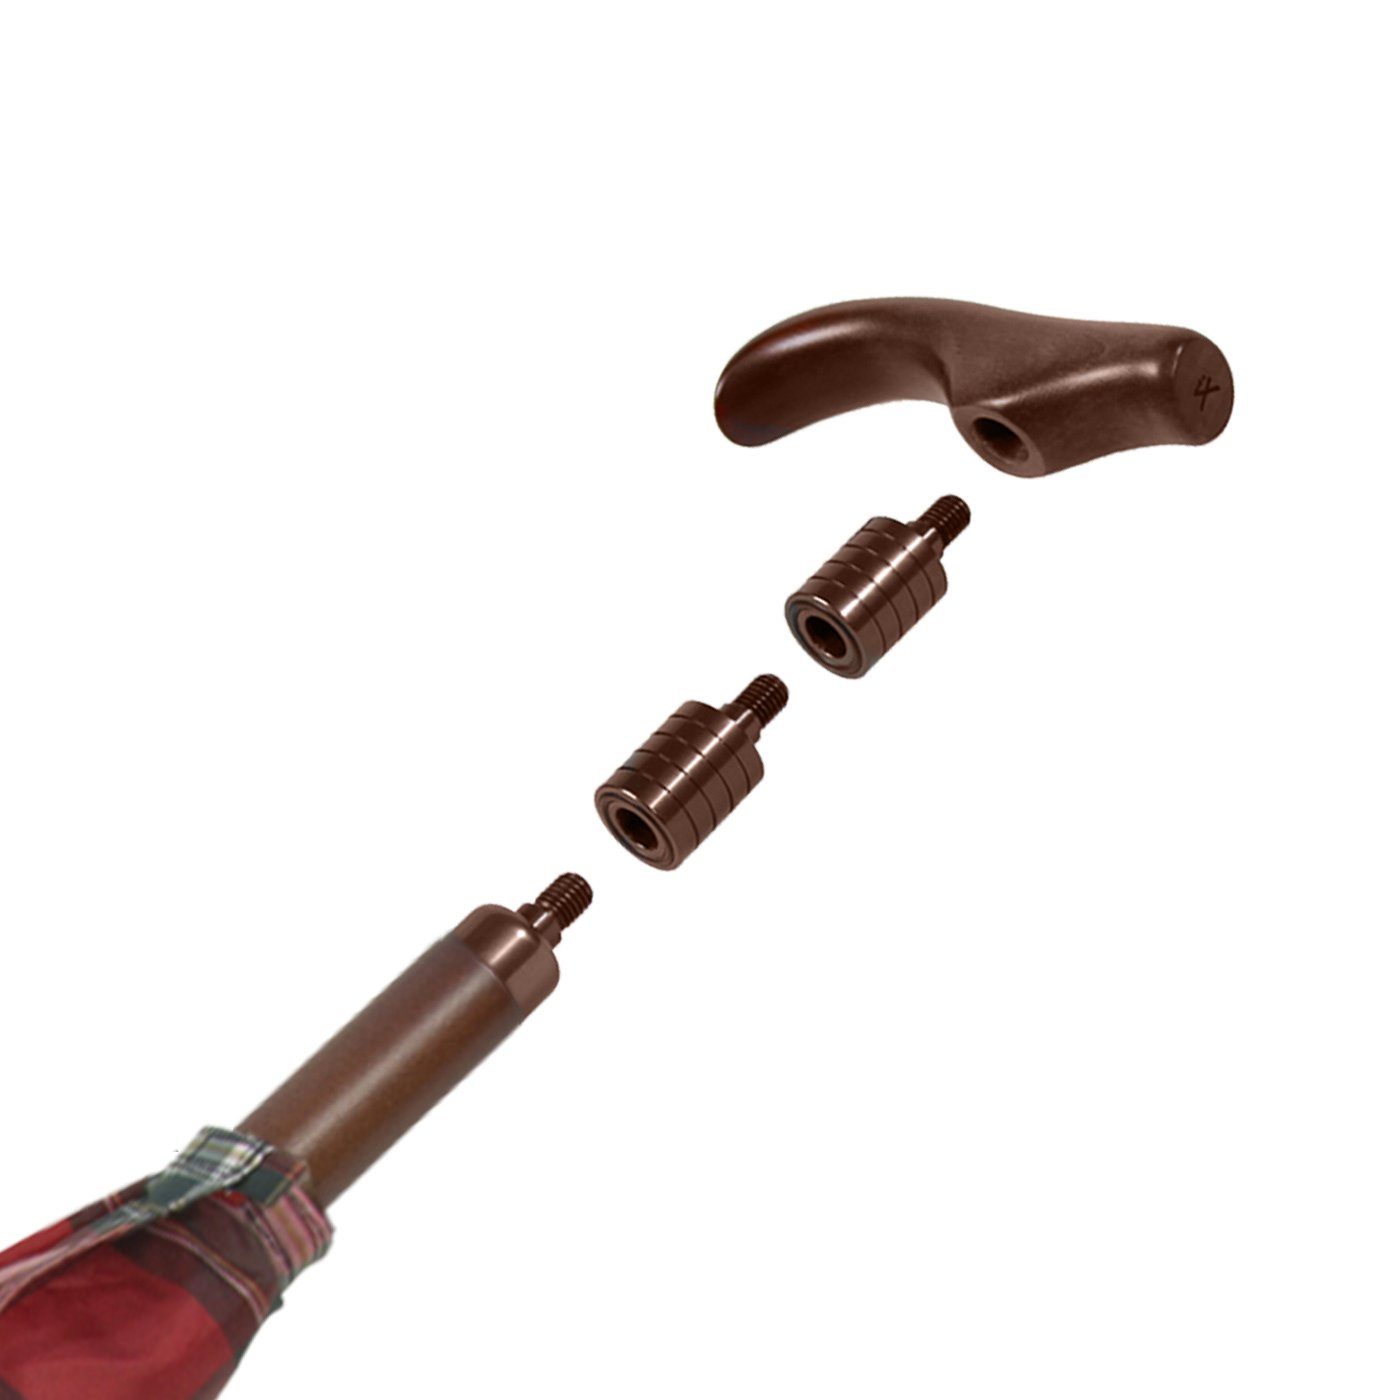 Holzgriff rot stabil, höhenverstellbar klassisch Langregenschirm Stützschirm iX-brella kariert sehr